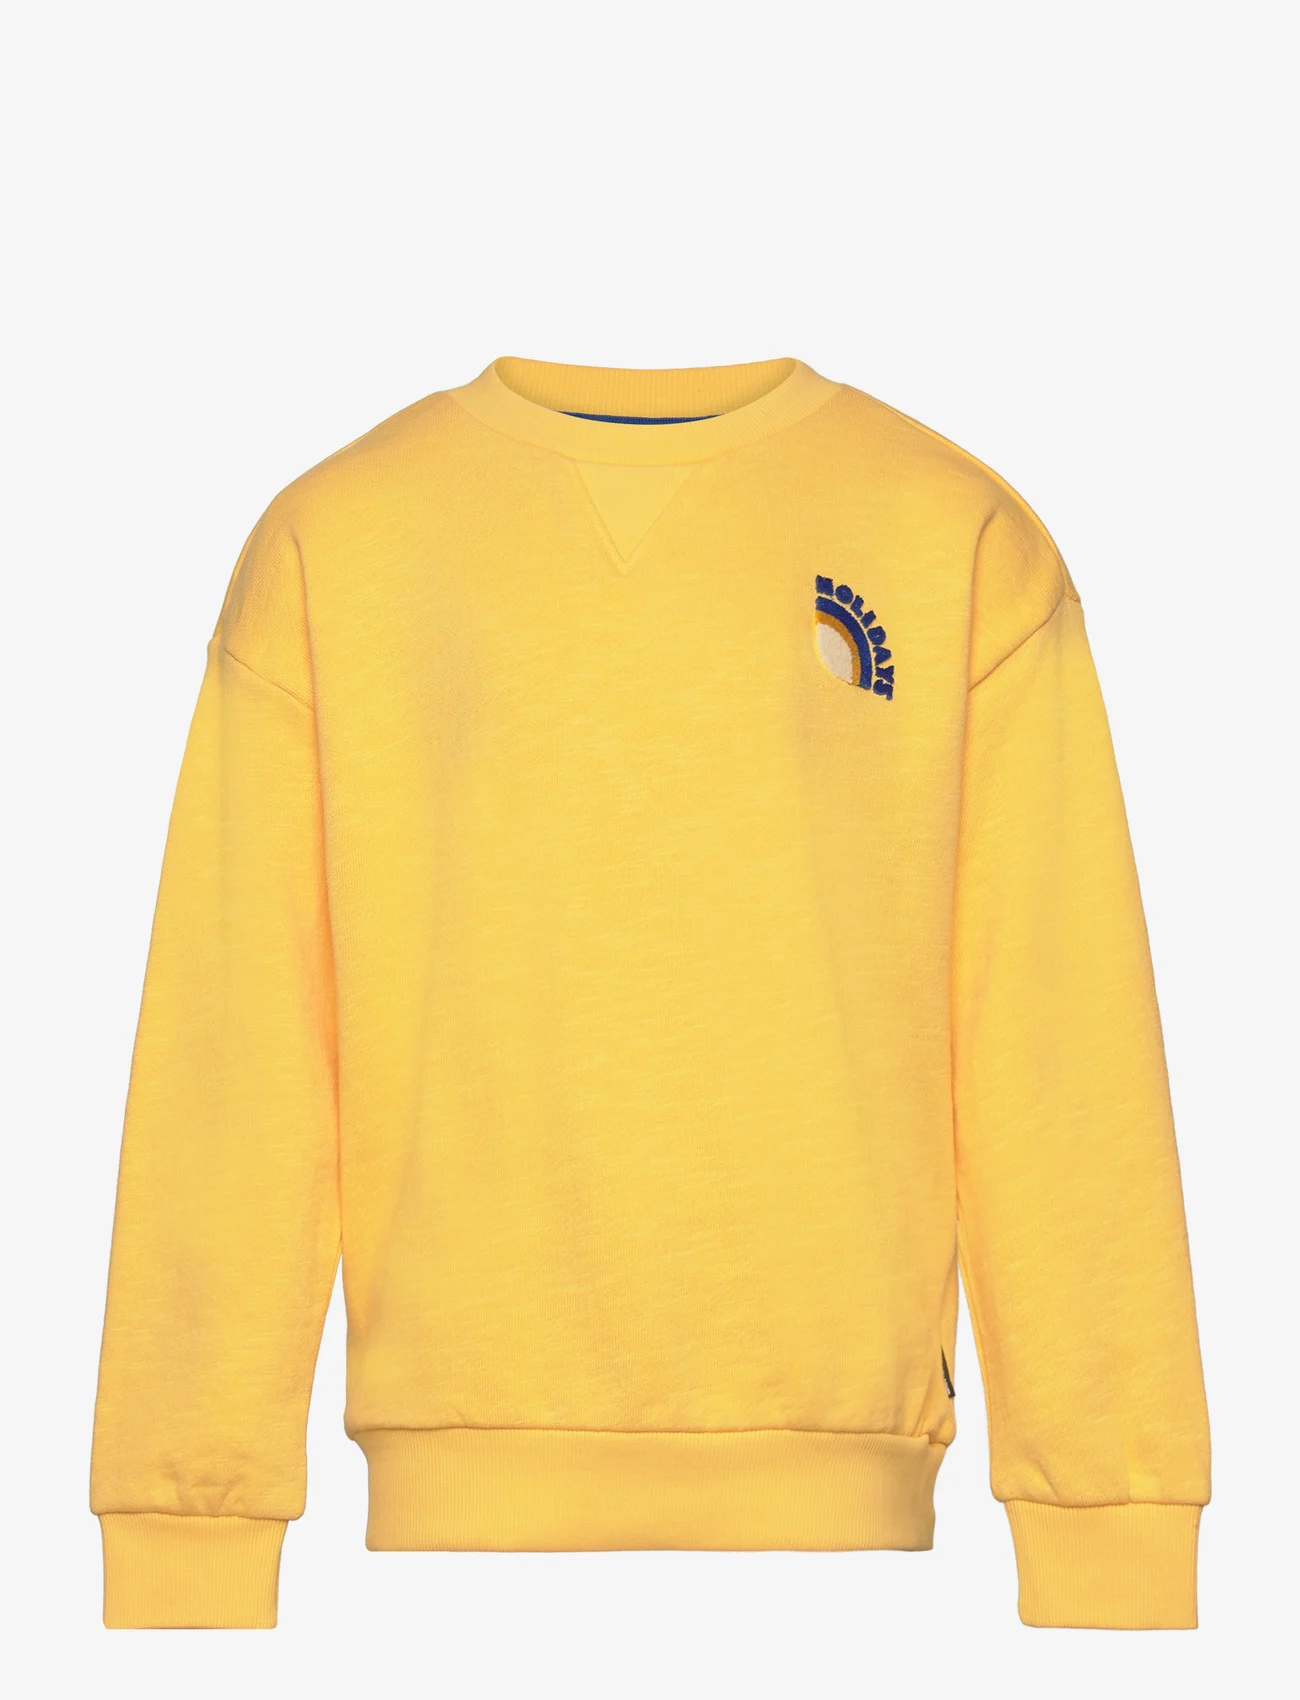 TUMBLE 'N DRY - San Remo - sweatshirts - yellow - 0